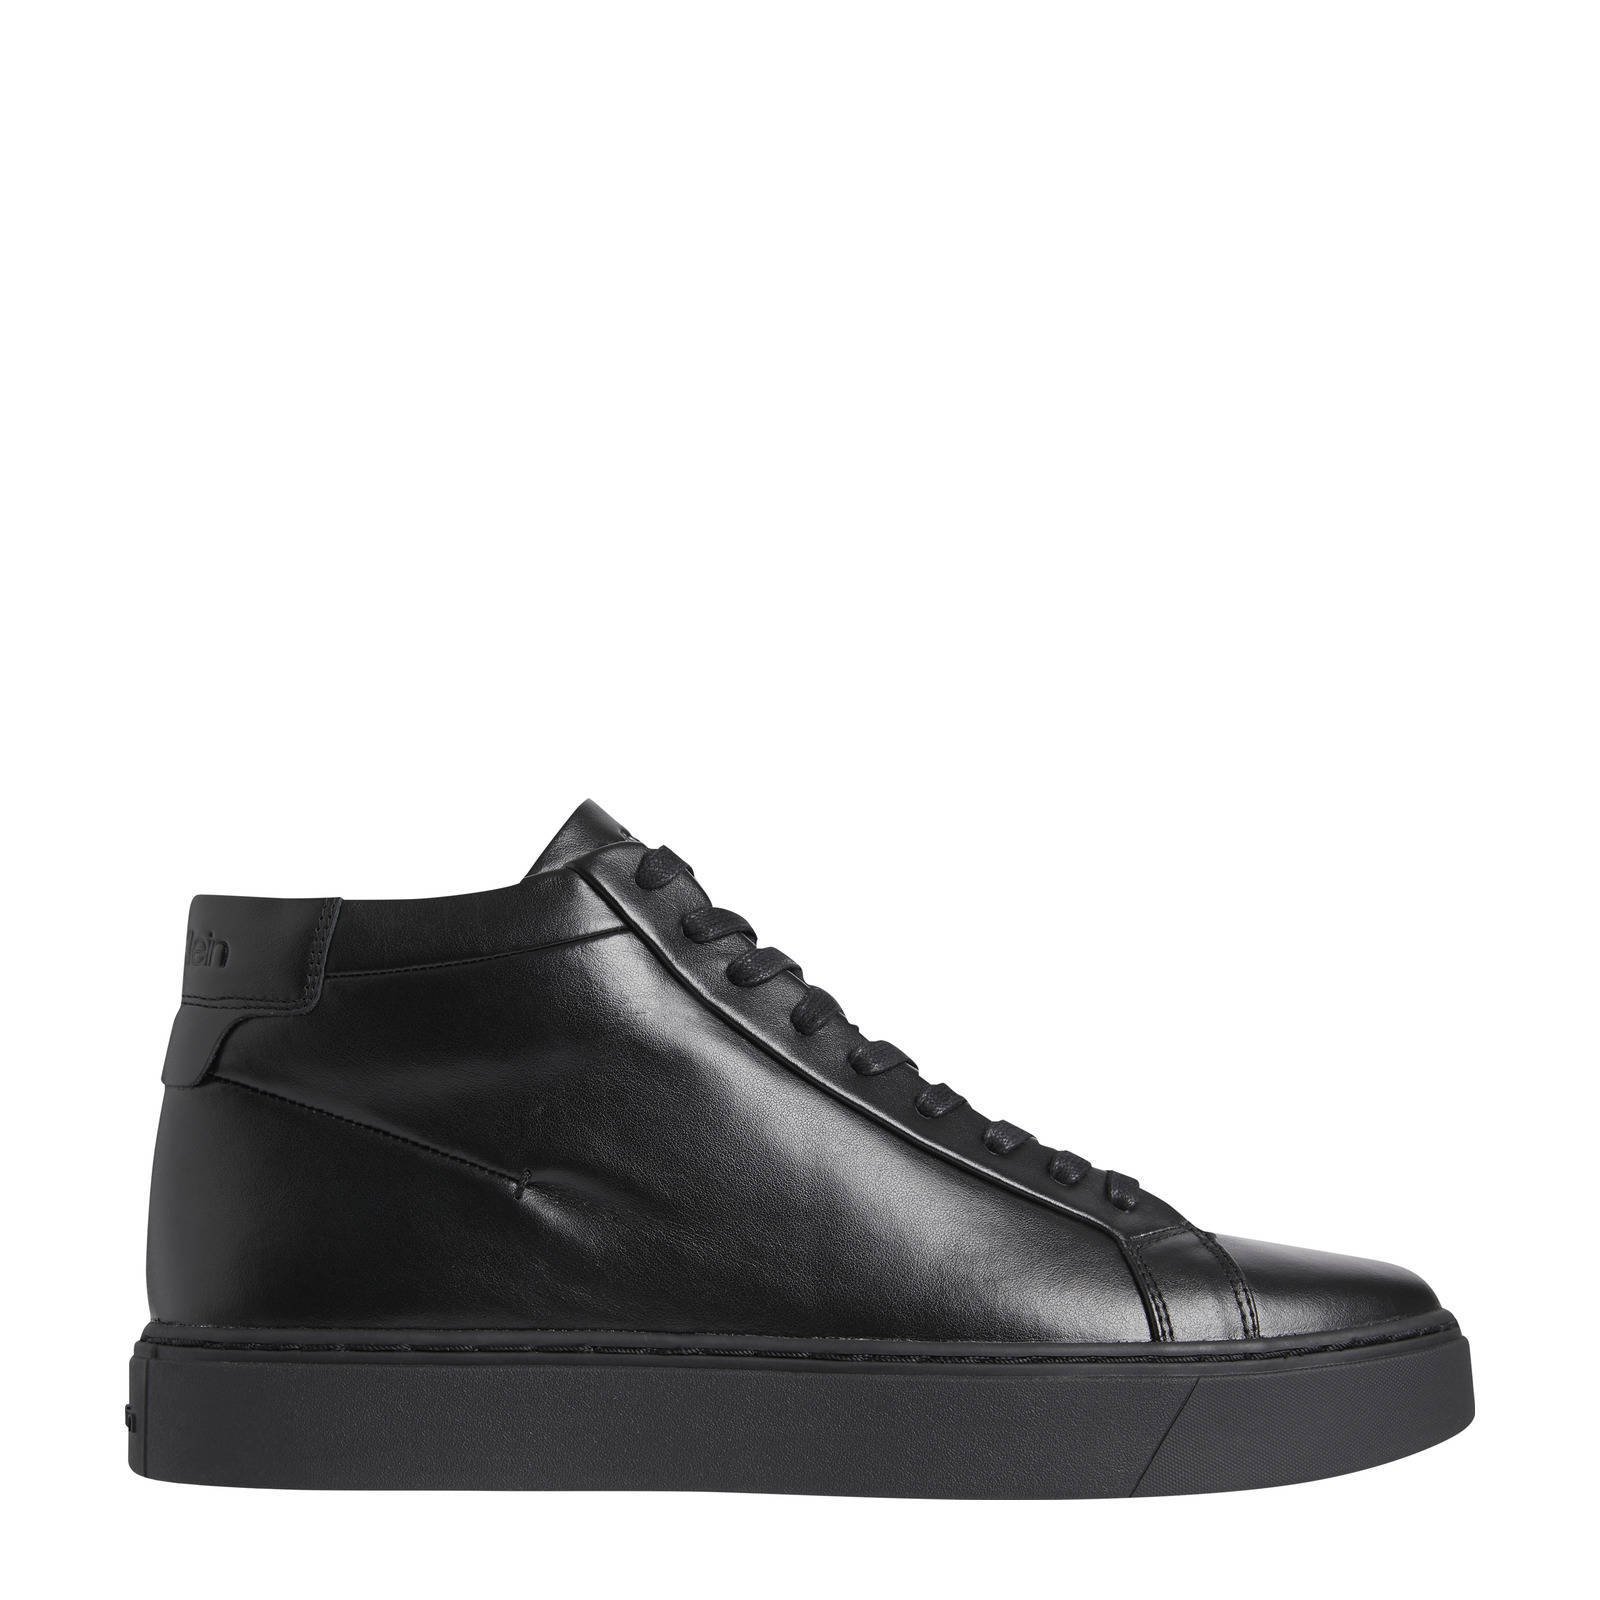 Santoni Leer High-top Sneakers in het Zwart voor heren Heren Schoenen voor voor Sneakers voor Hoge sneakers 